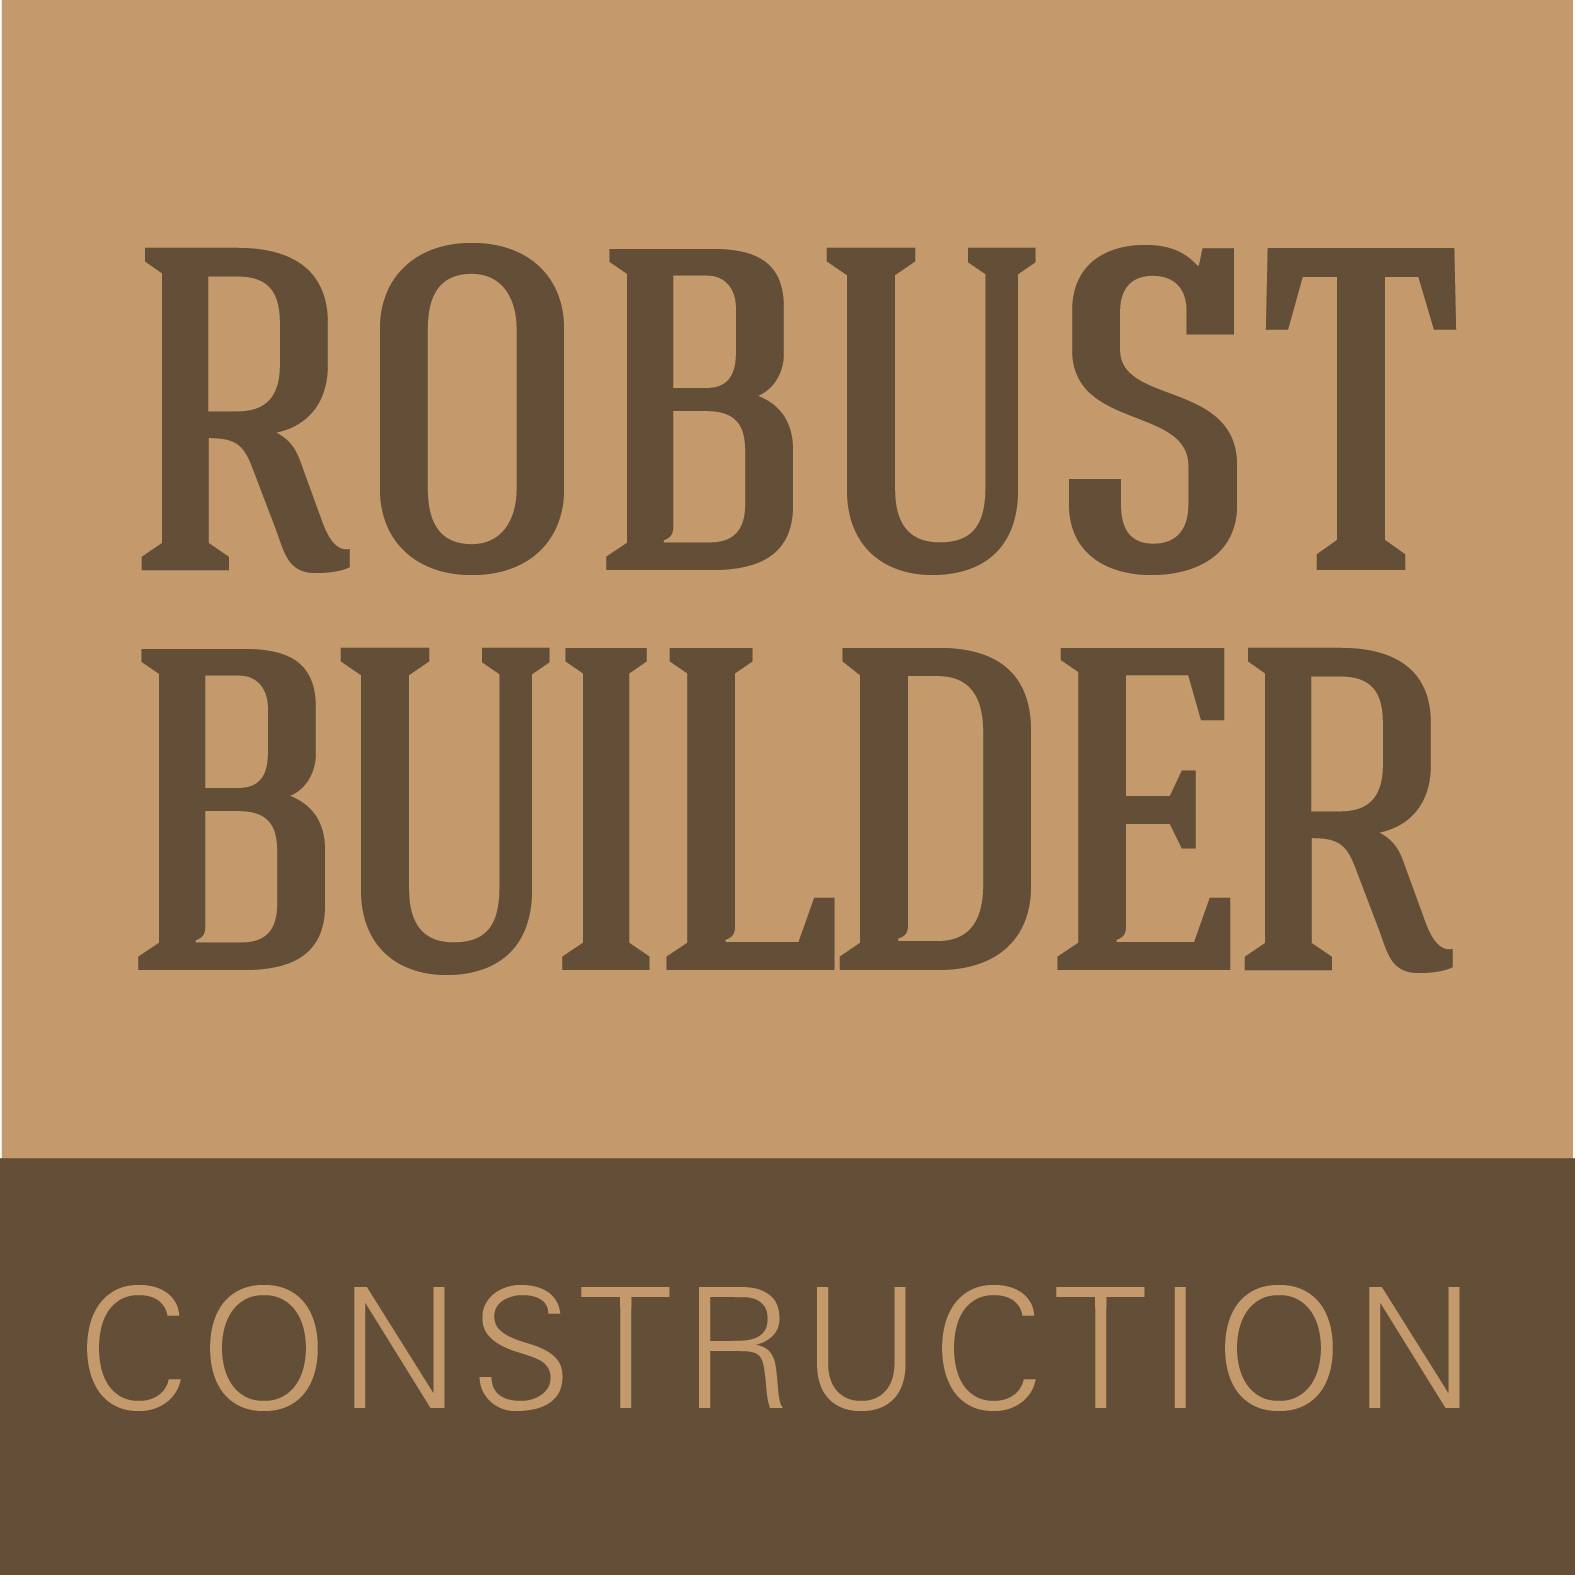 Robust Builder Construction